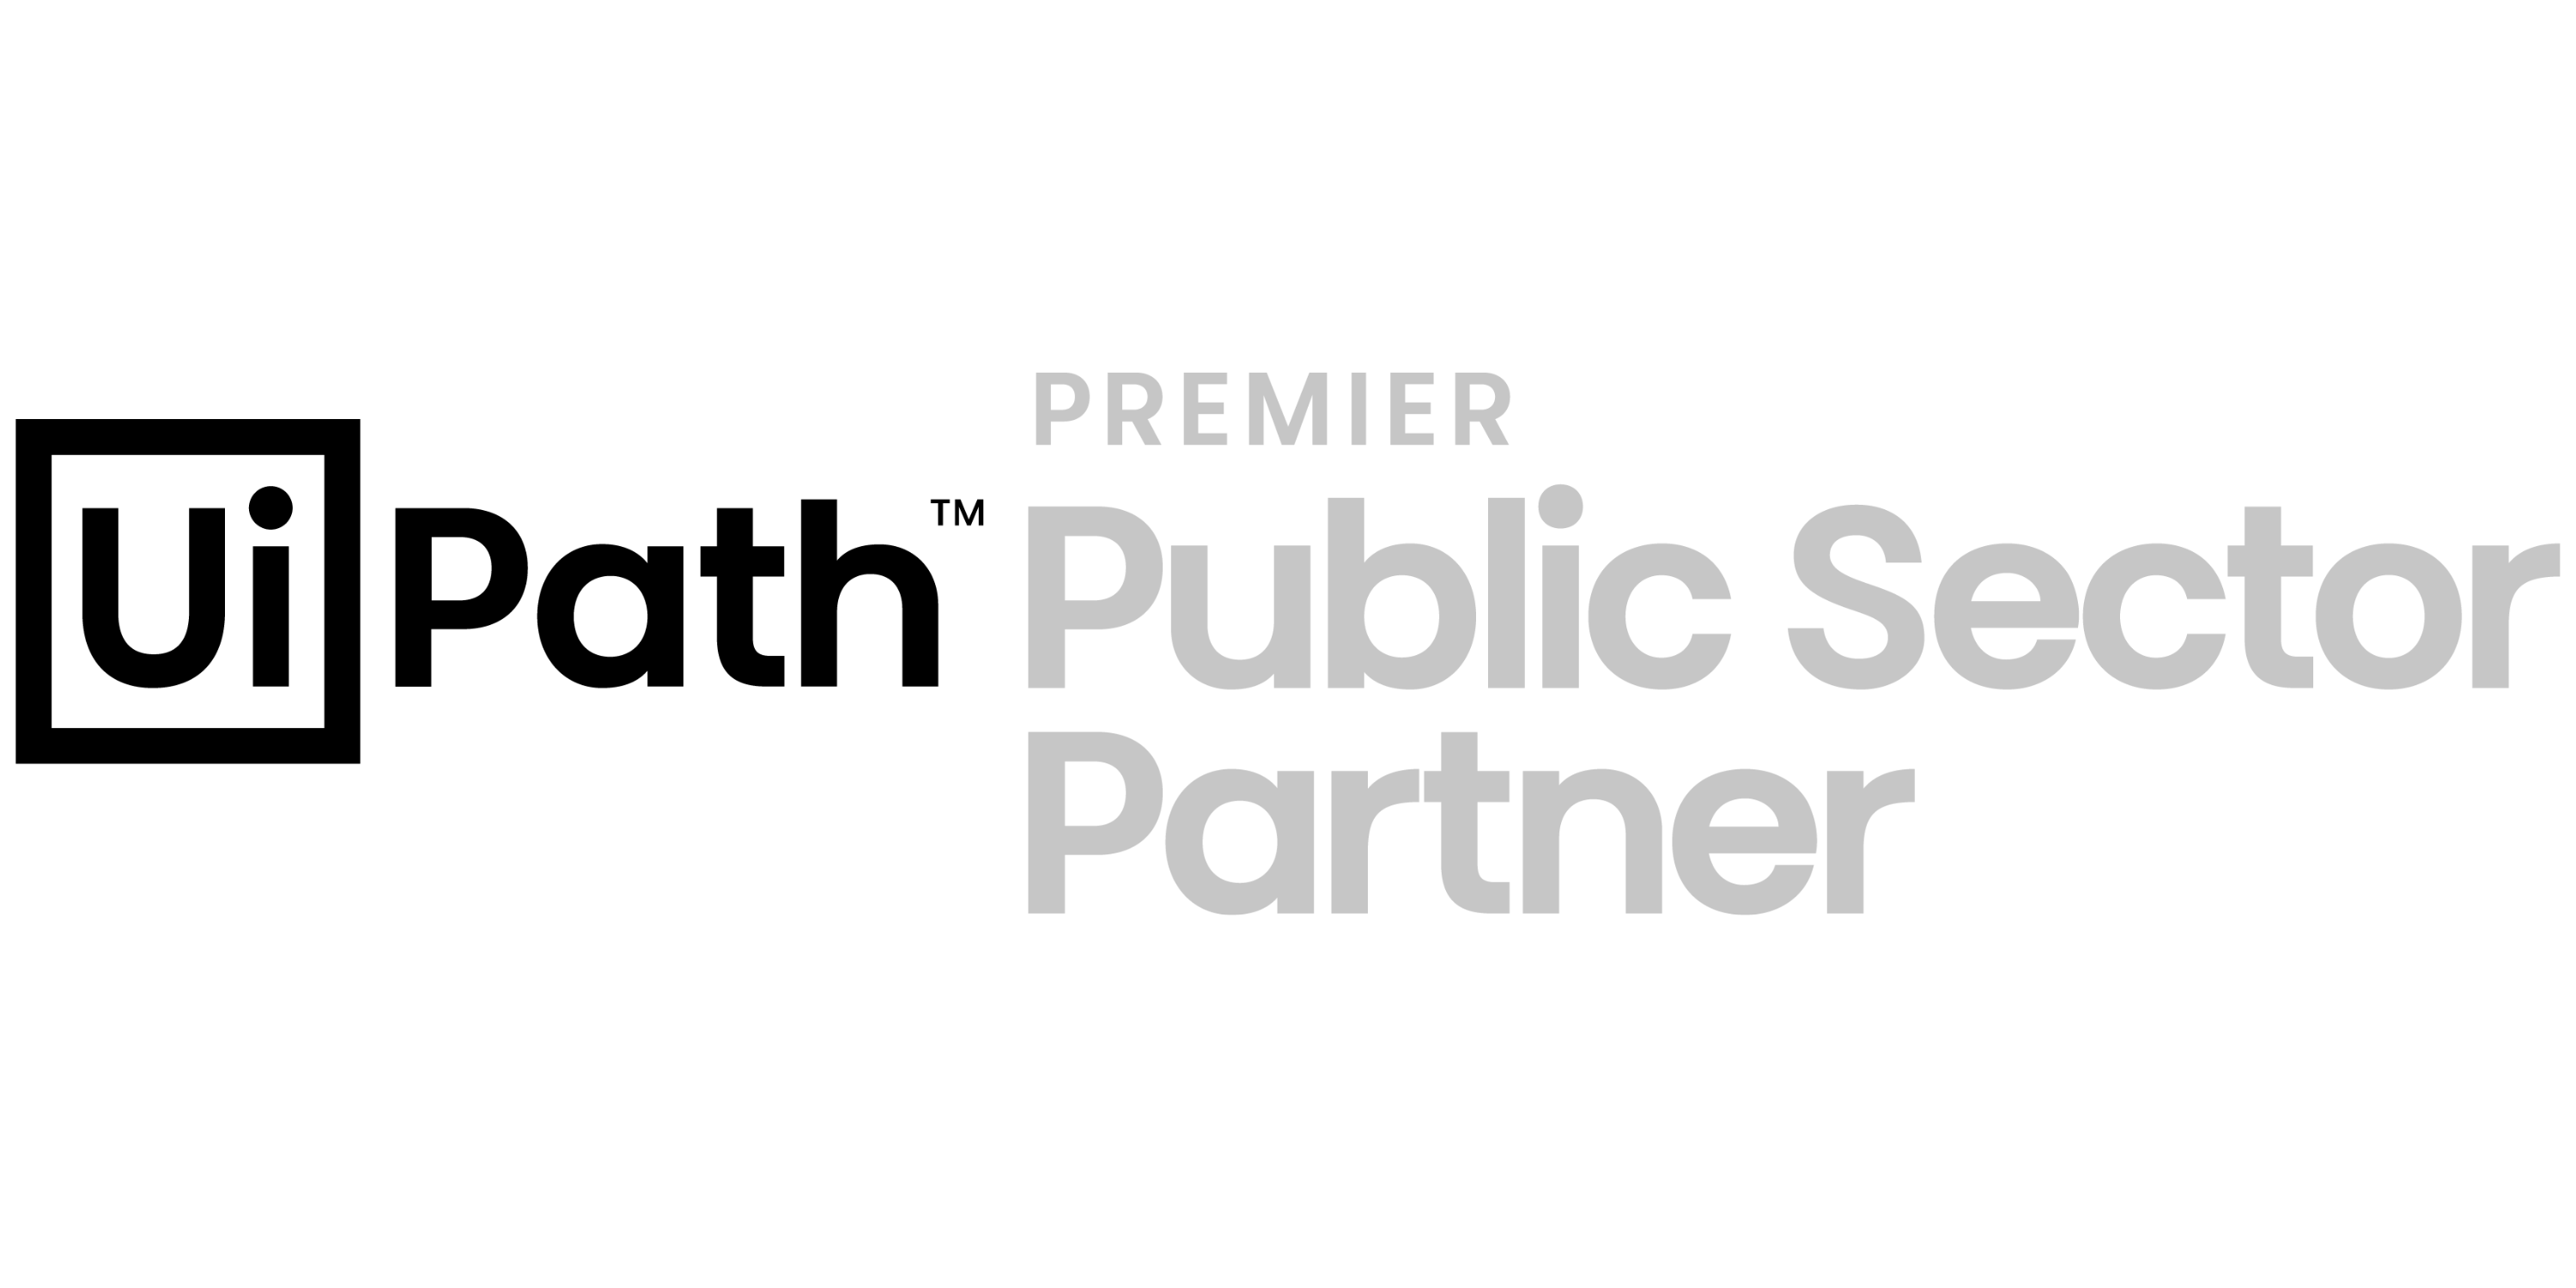 Uipath Premier Public Sector Partner Logo